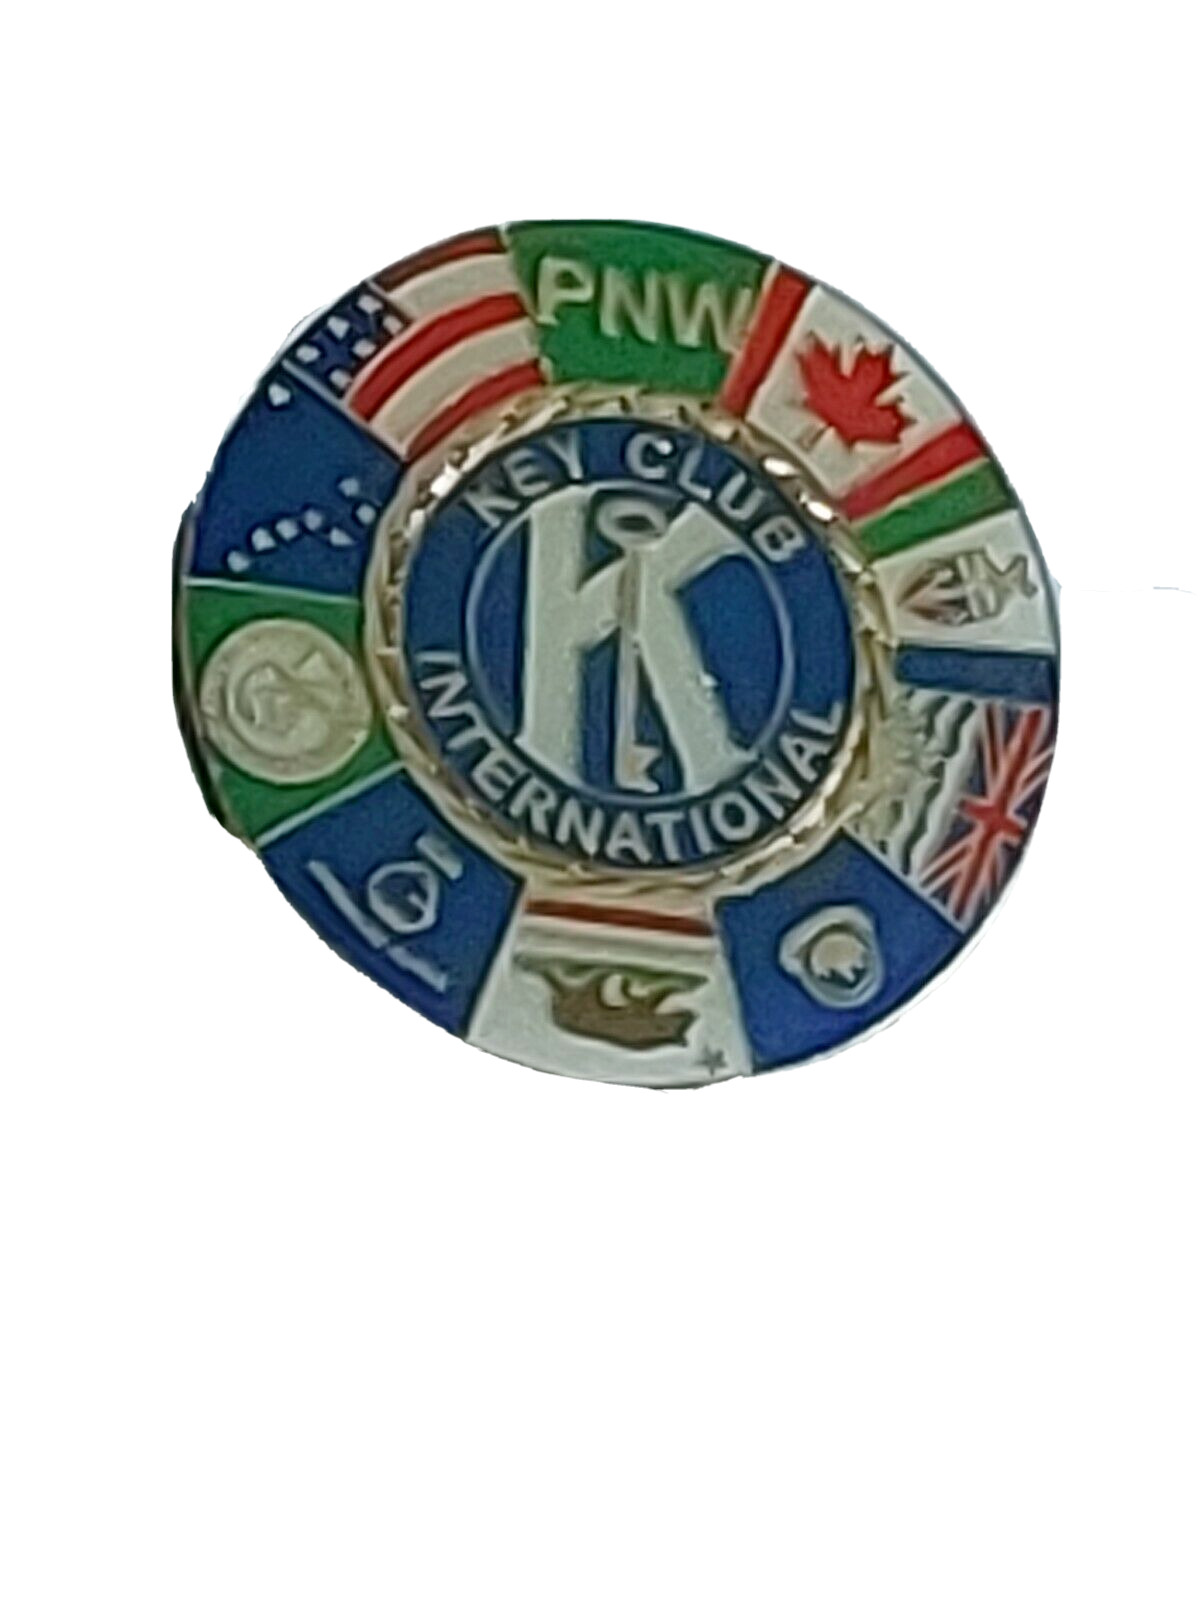 Kiwanis International PNW KEY CLUB Lapel Pin (050123)